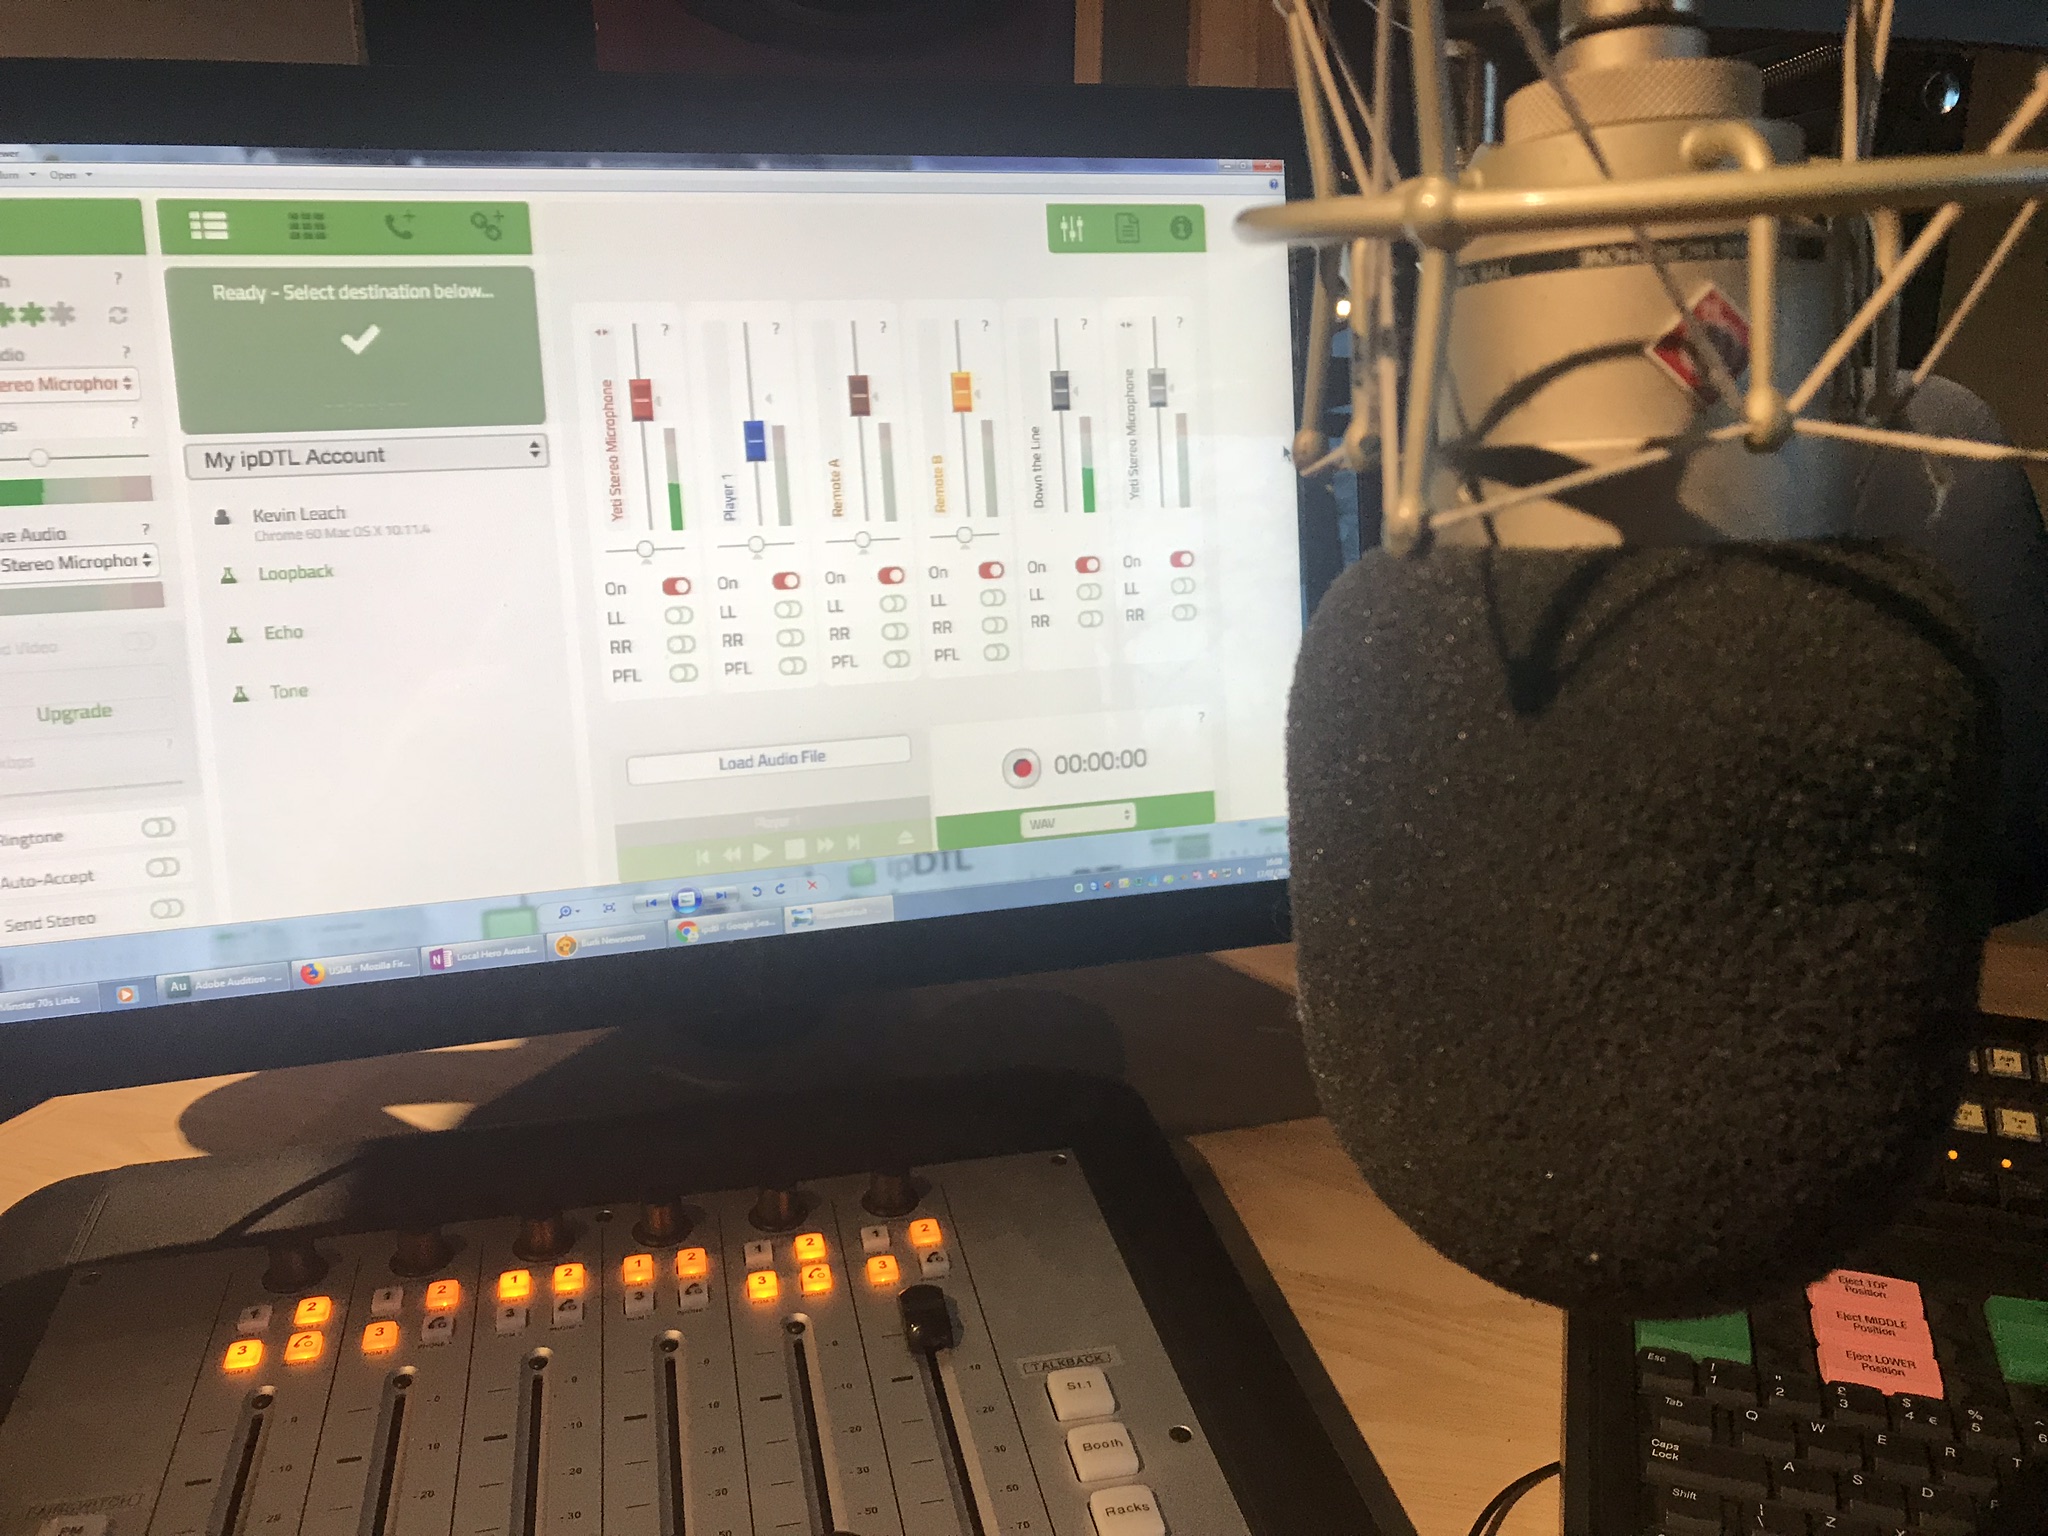 IPDTL in a radio studio environment